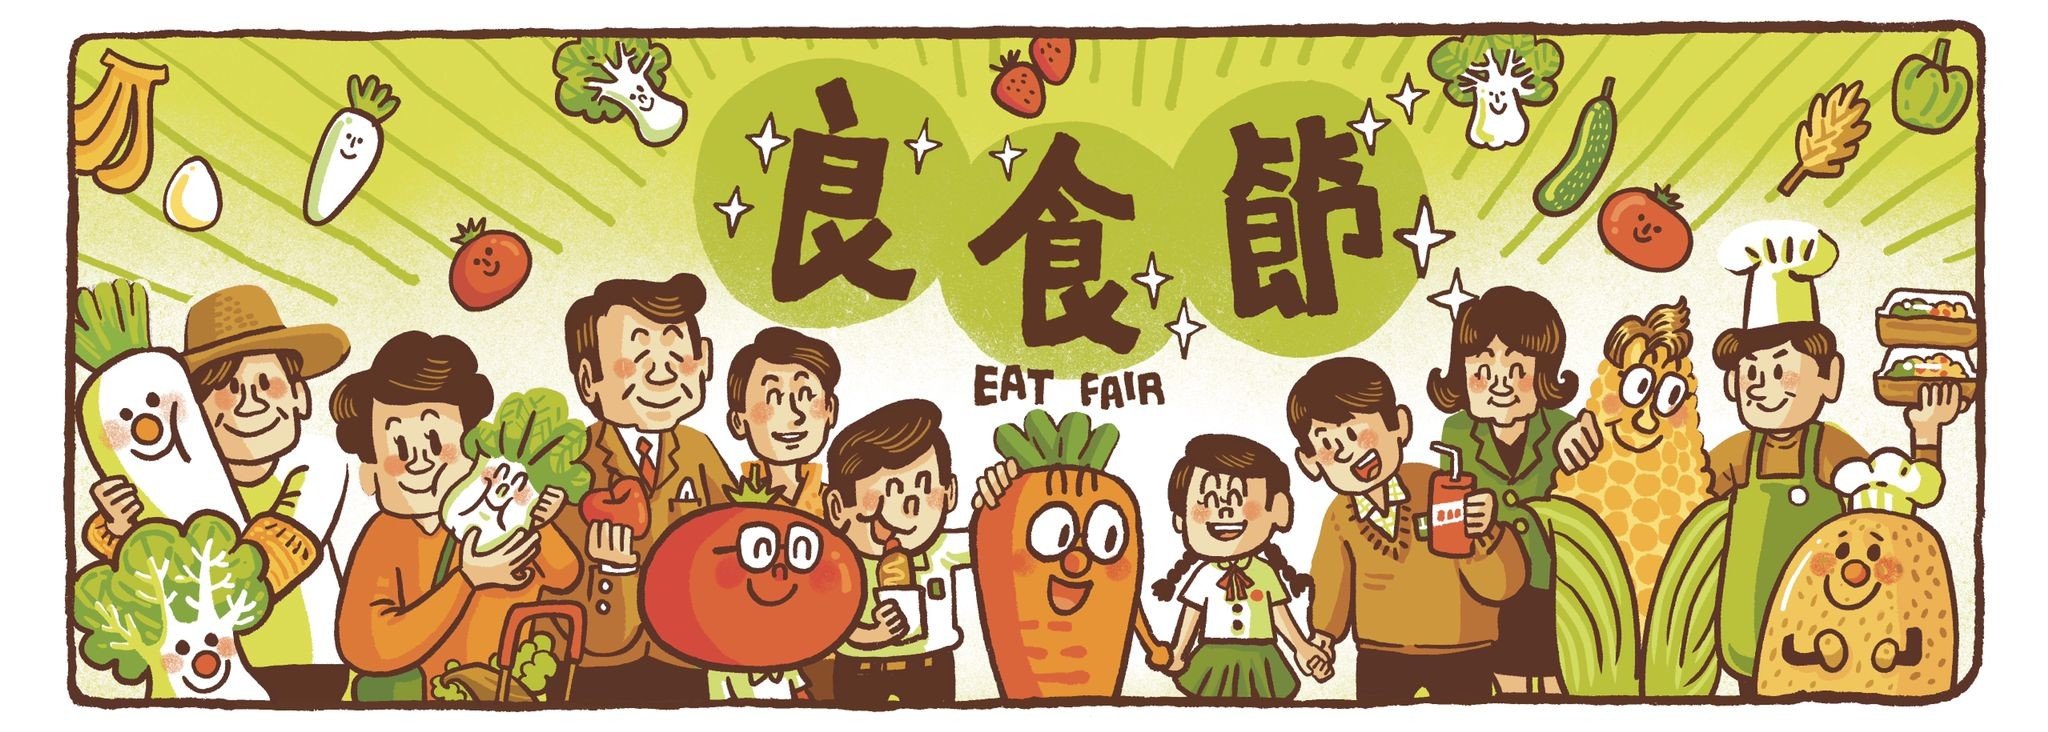 eat-fair-festival